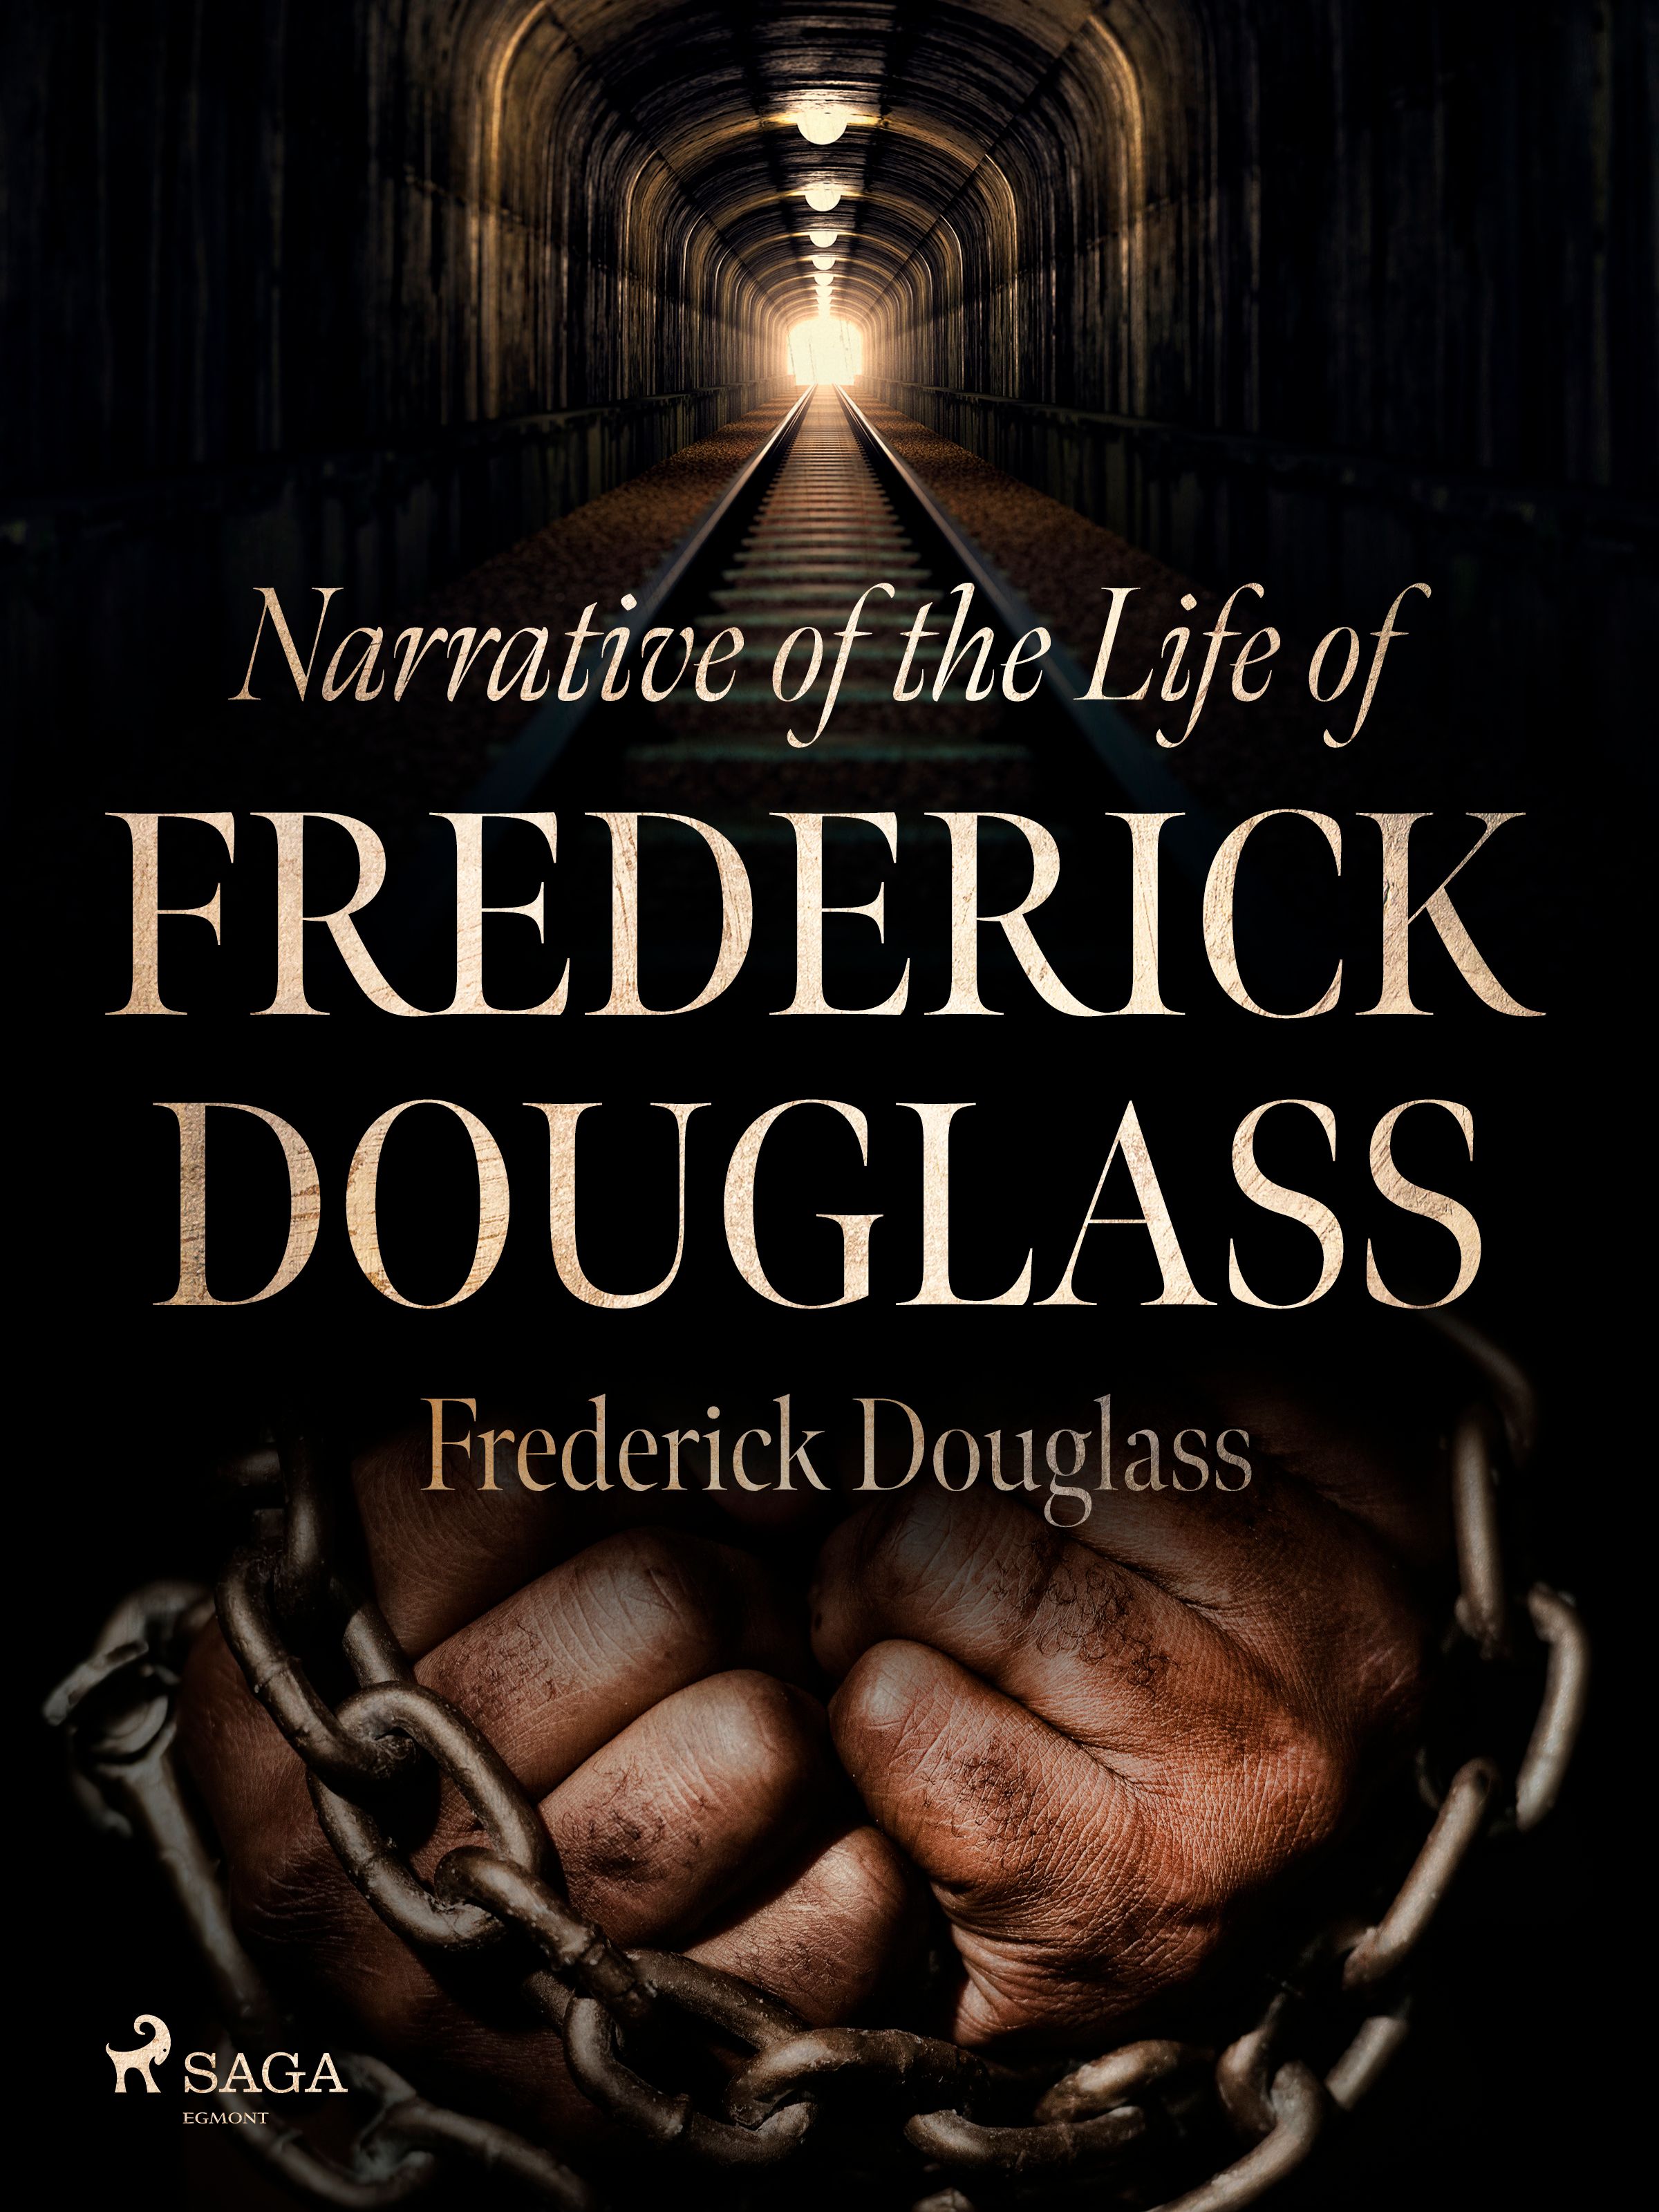 Narrative of the Life of Frederick Douglass, eBook by Frederick Douglass